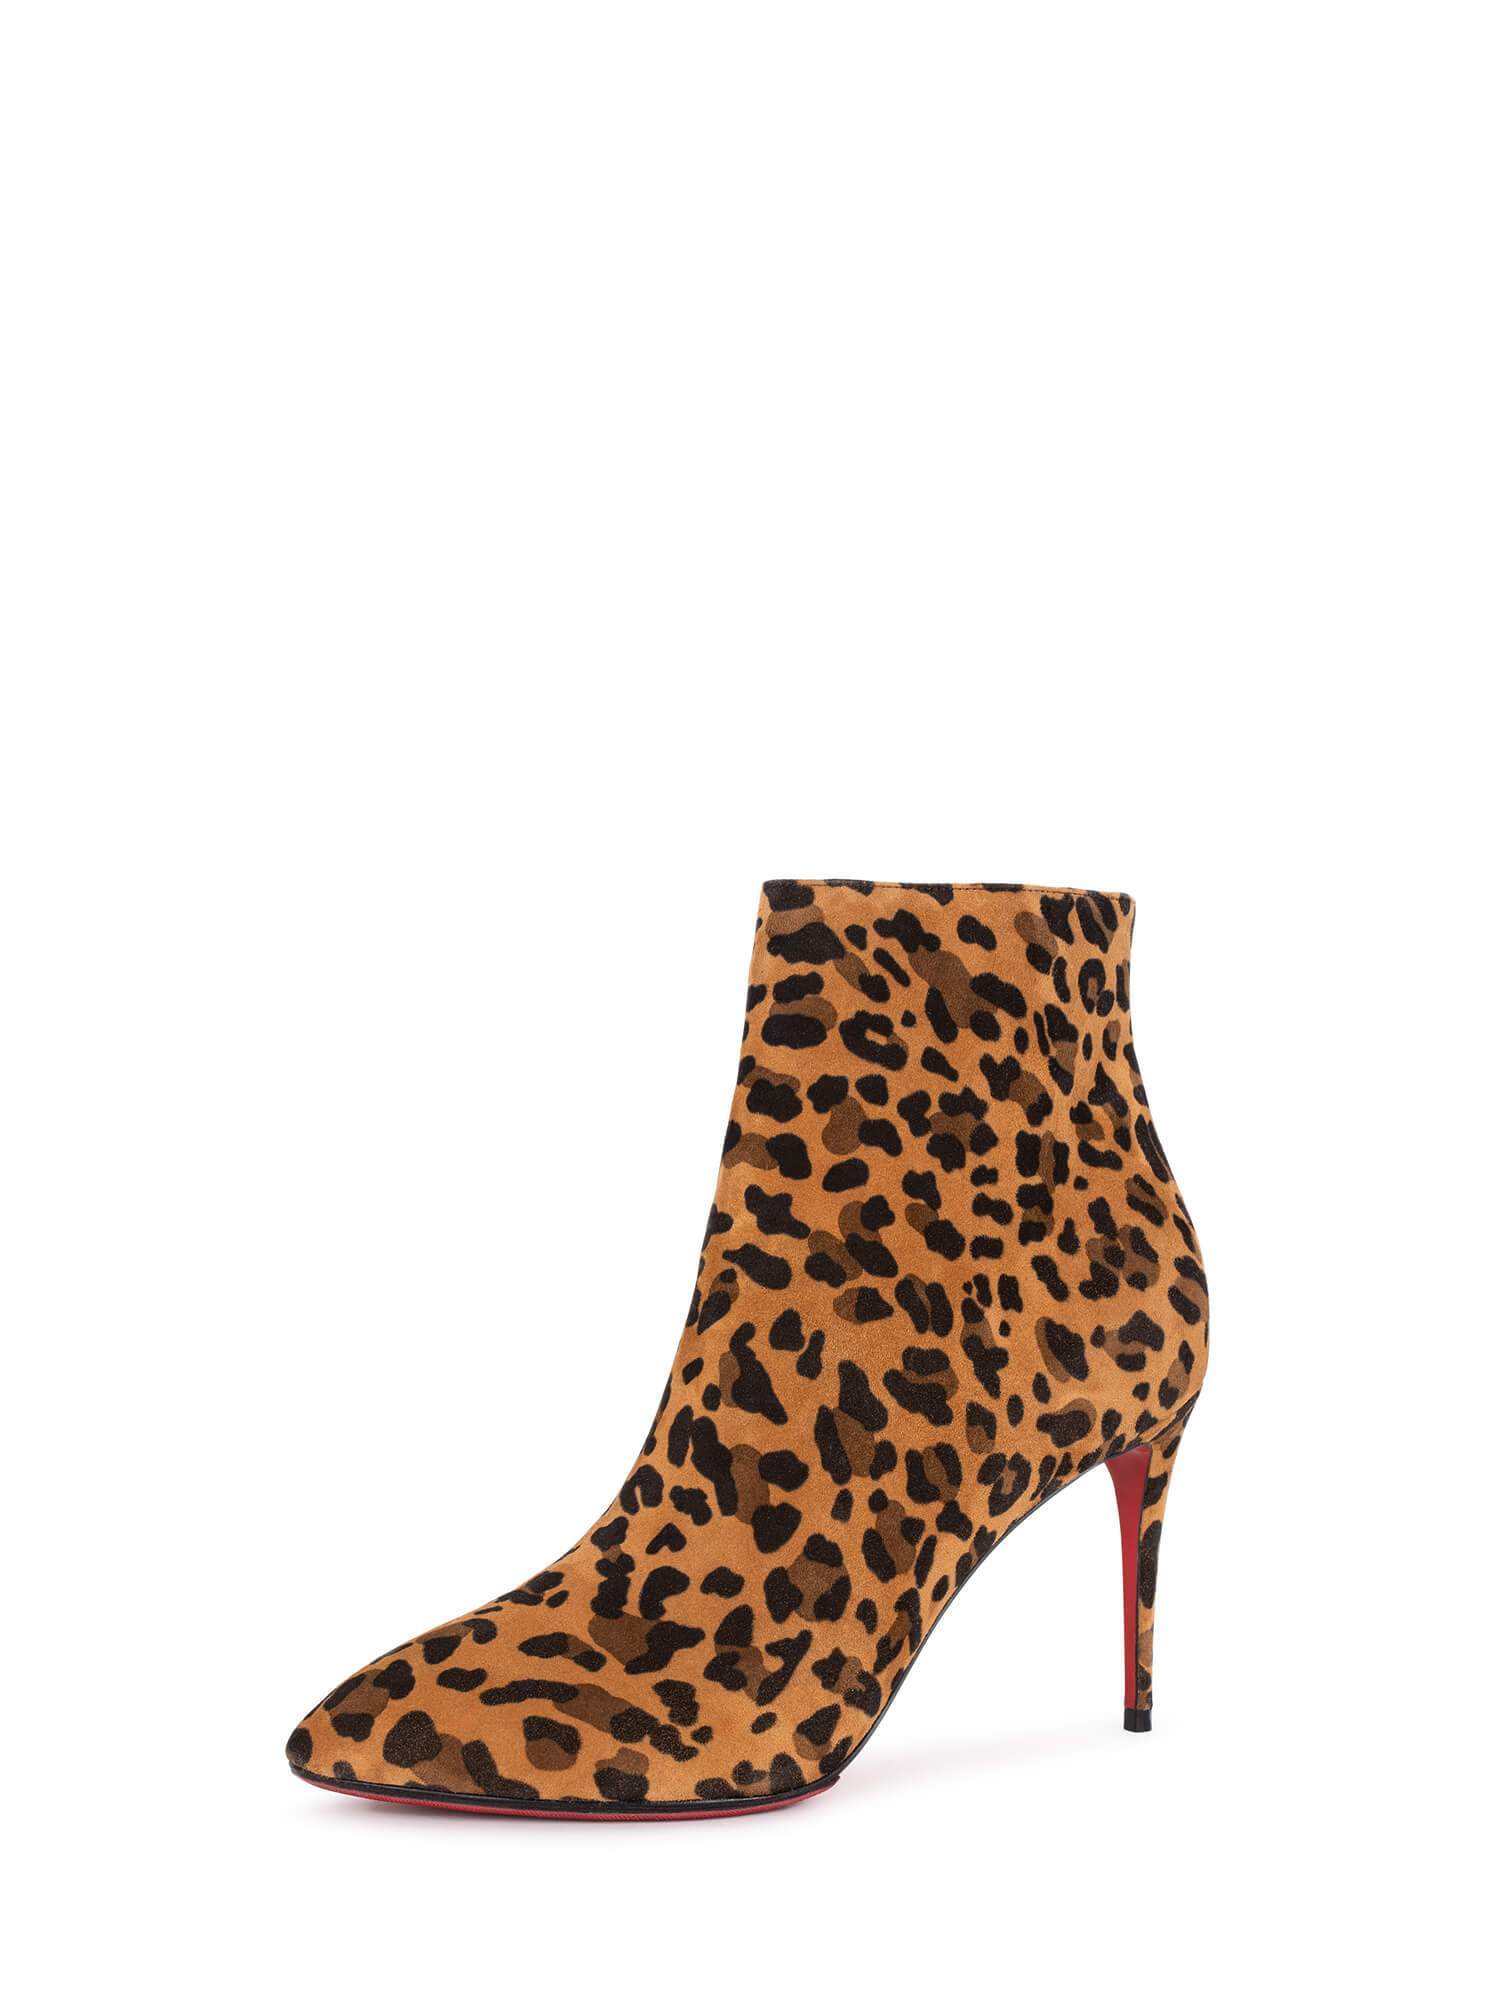 Christian Louboutin Leather Suede Leopard Print Eloise 85 Ankle Boots-designer resale